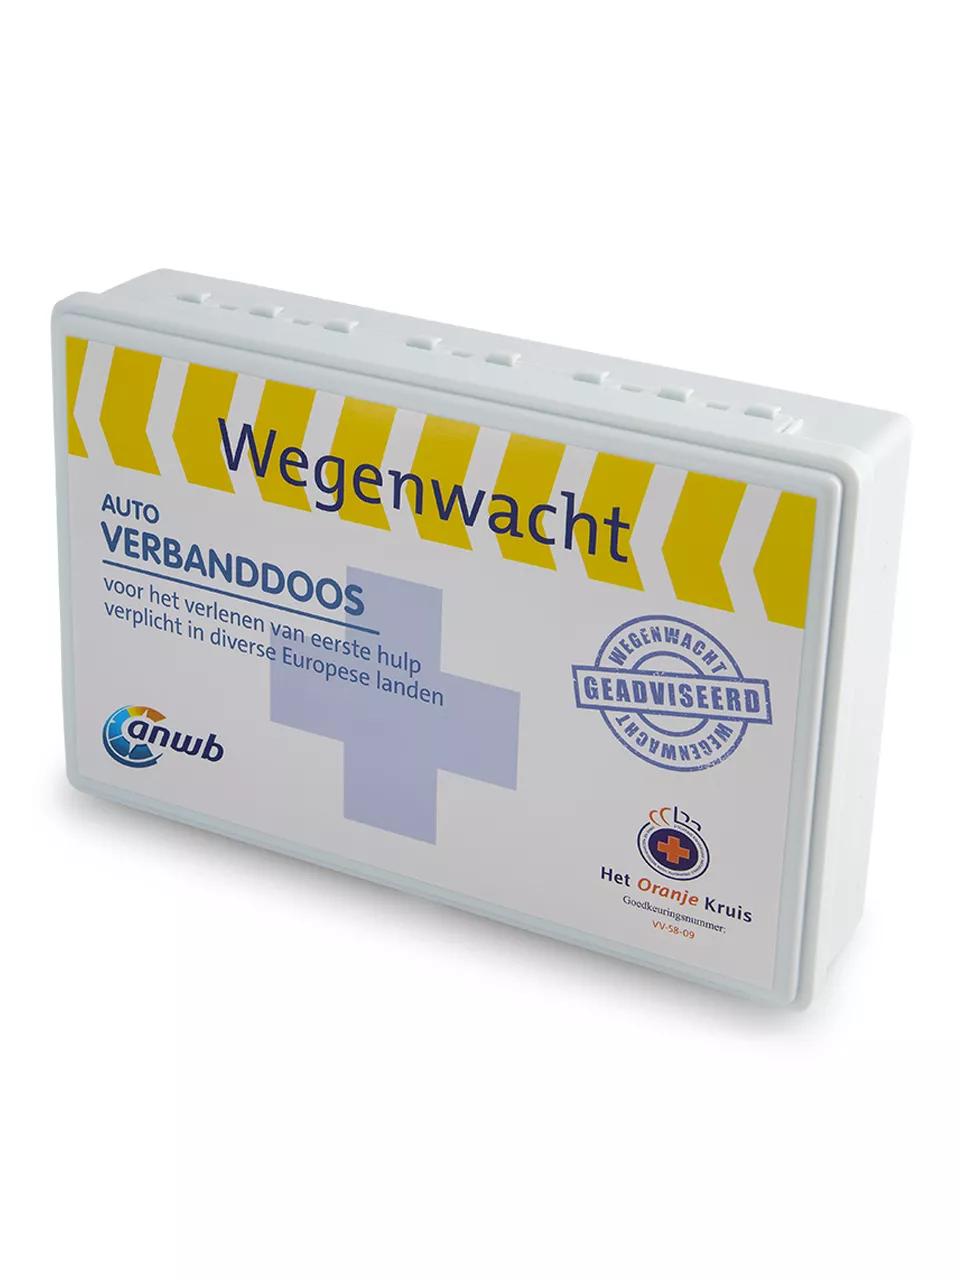 ANWB Auto verbanddoos –  Wegenwacht main product image